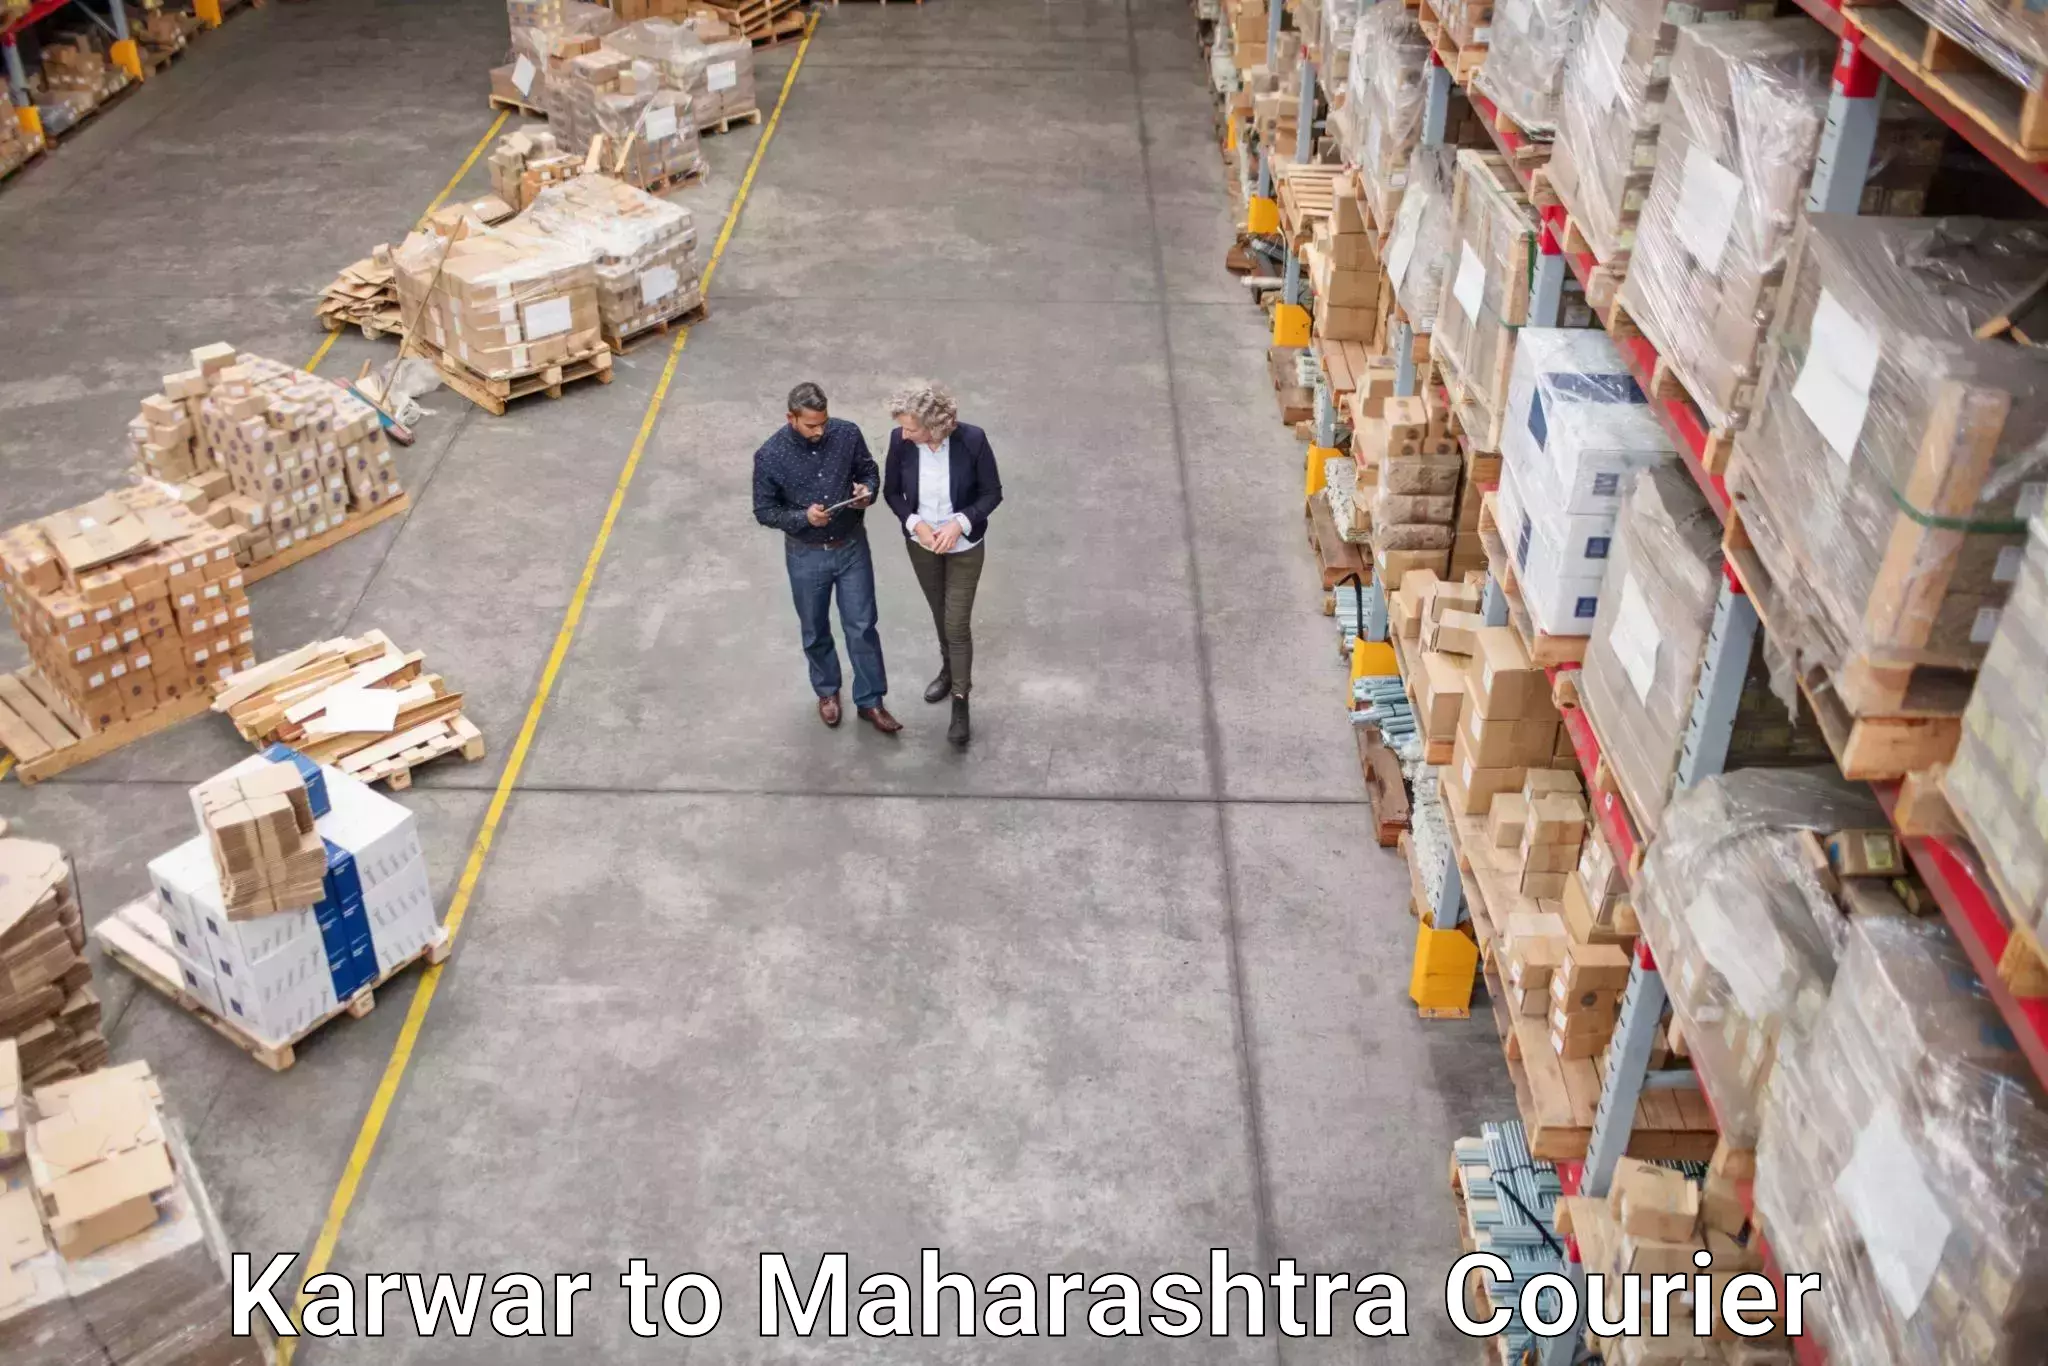 Global shipping networks Karwar to Tata Institute of Social Sciences Mumbai